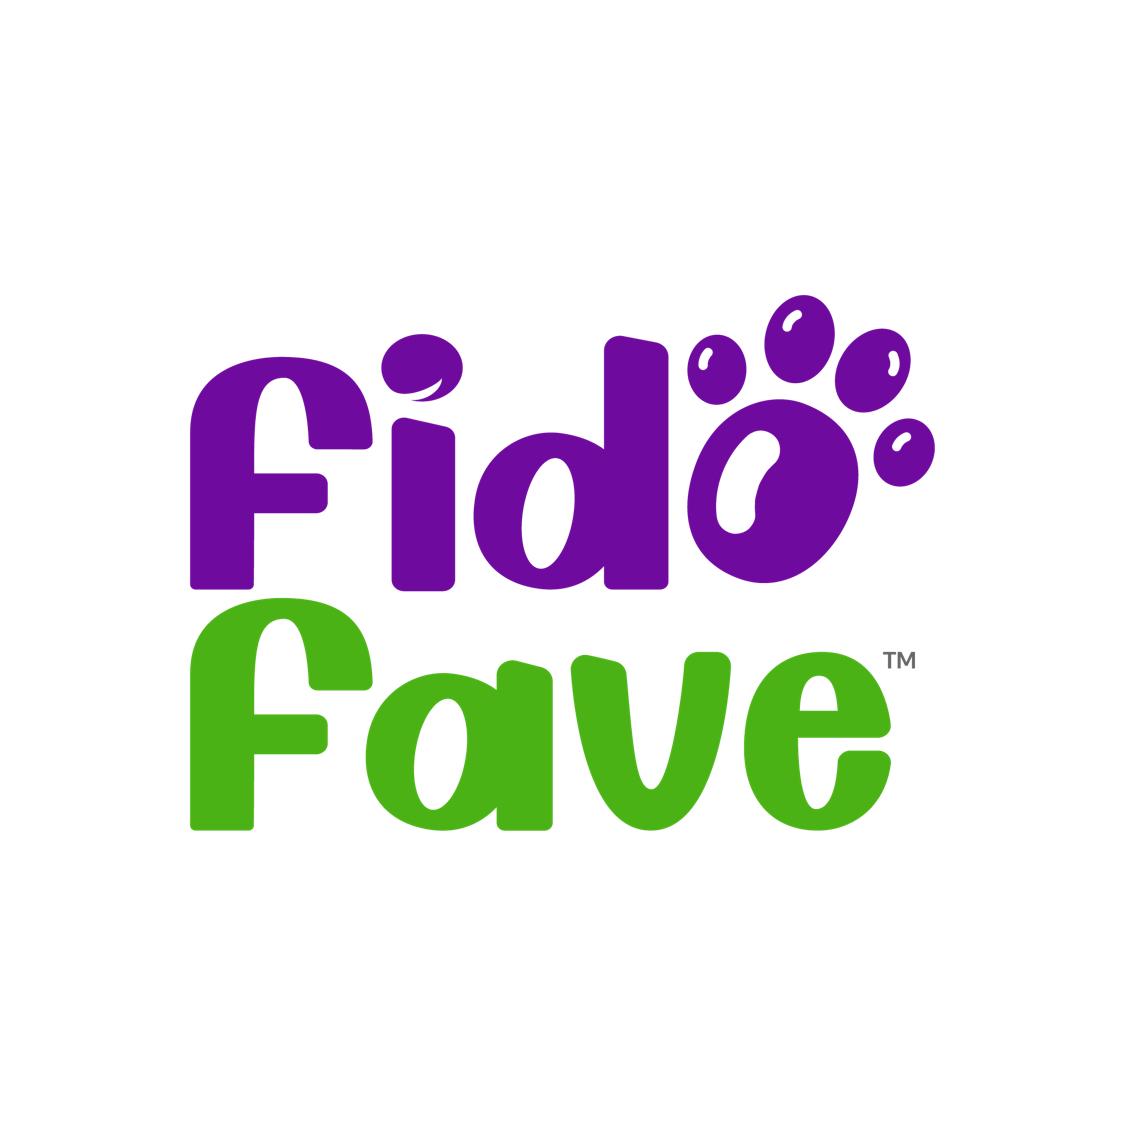 Fido Fave's images